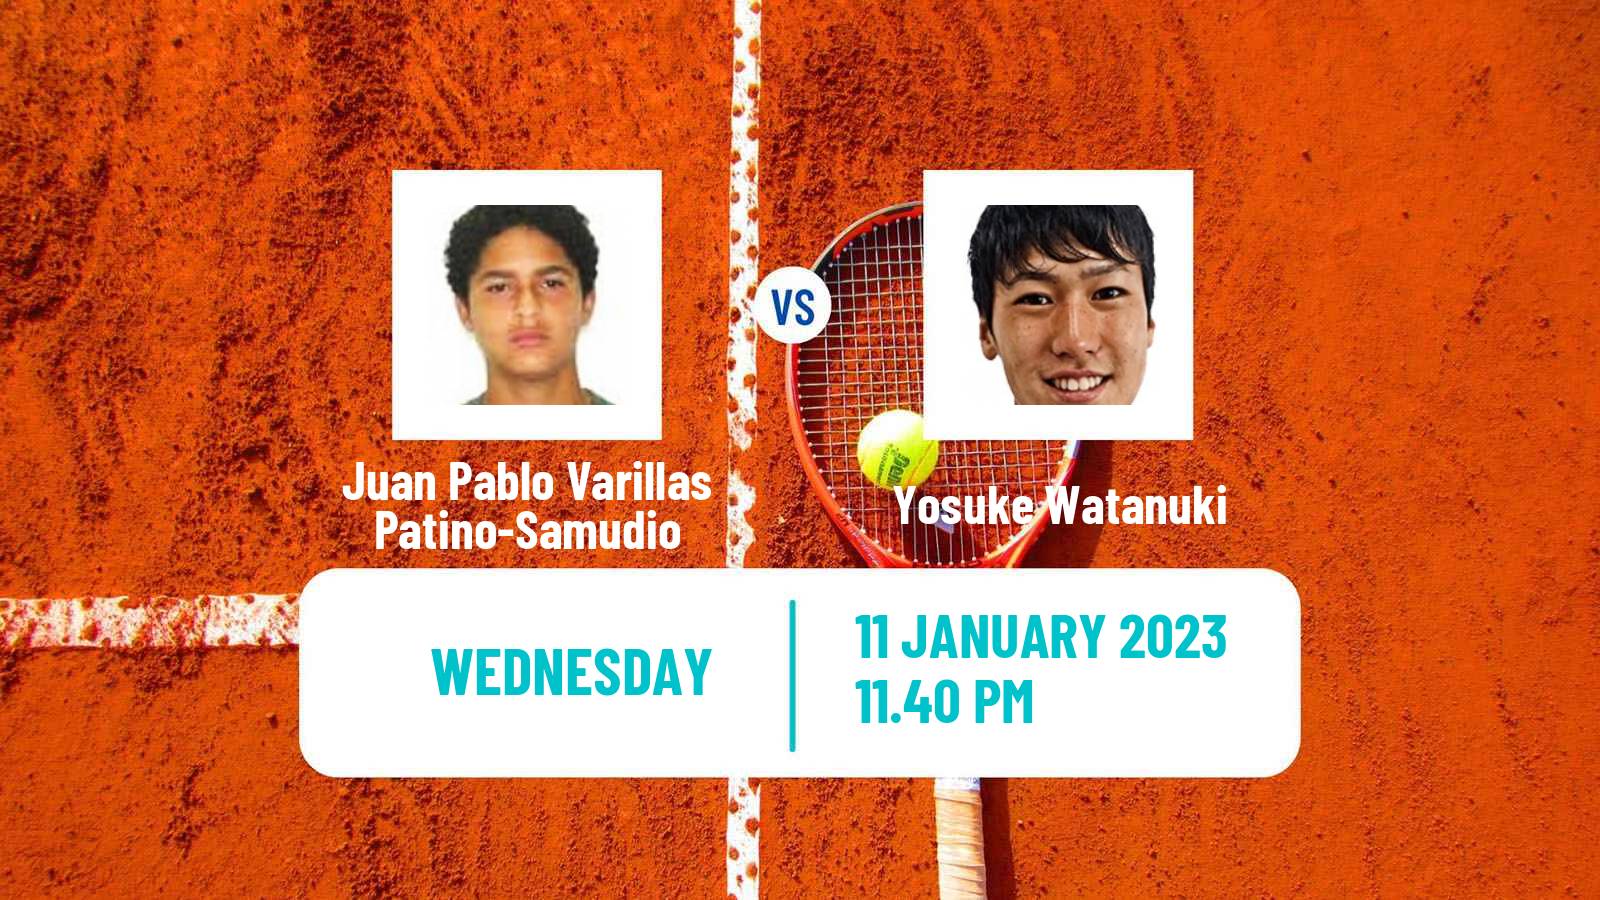 Tennis ATP Australian Open Juan Pablo Varillas Patino-Samudio - Yosuke Watanuki